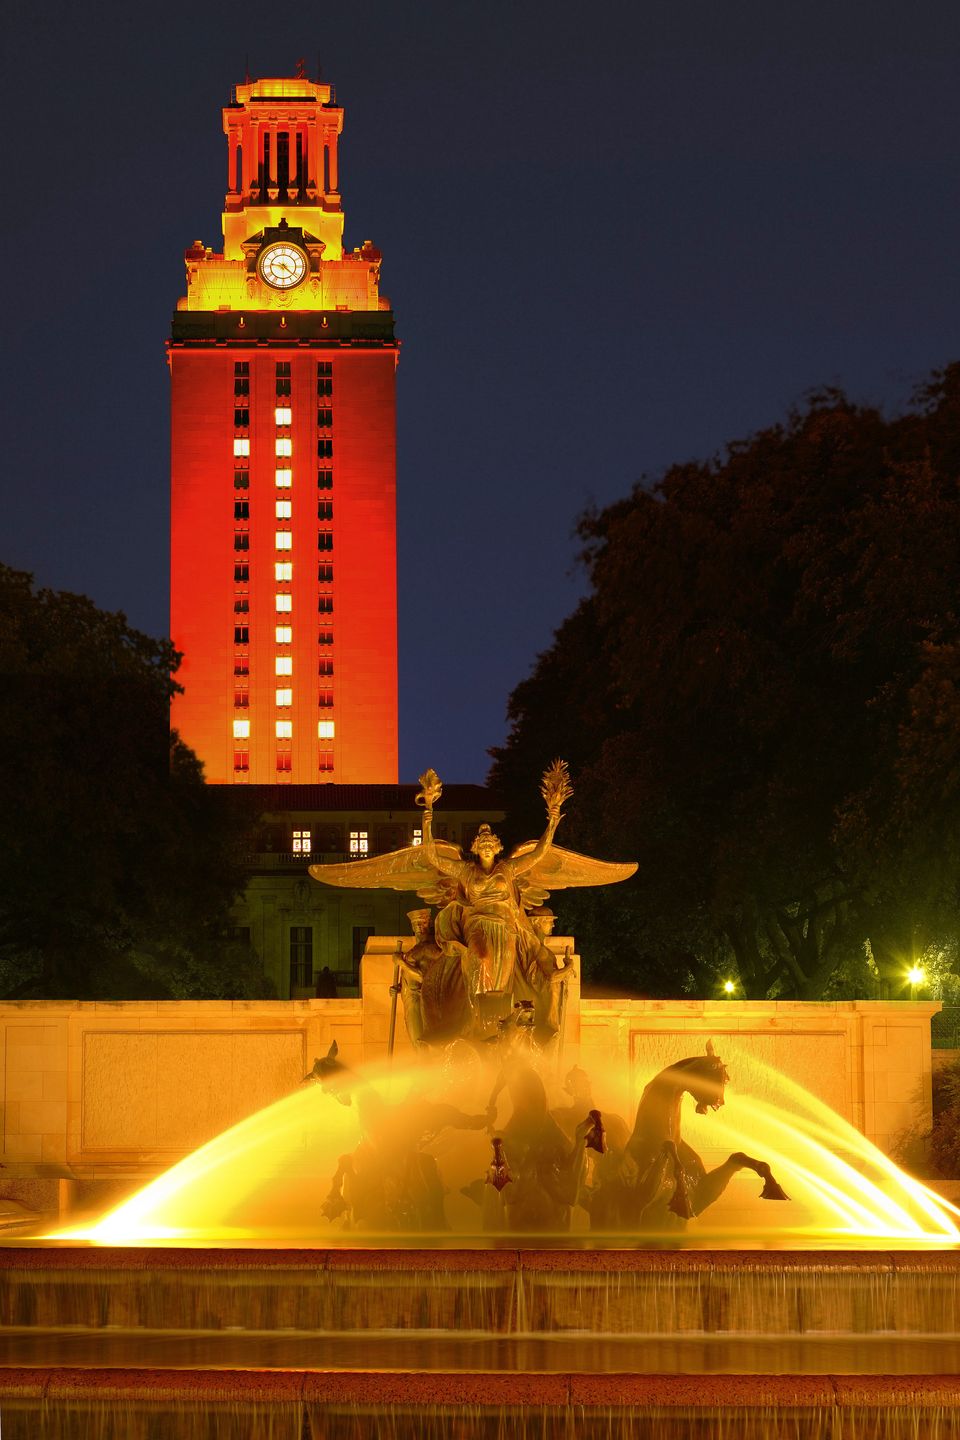 12. The University of Texas at Austin